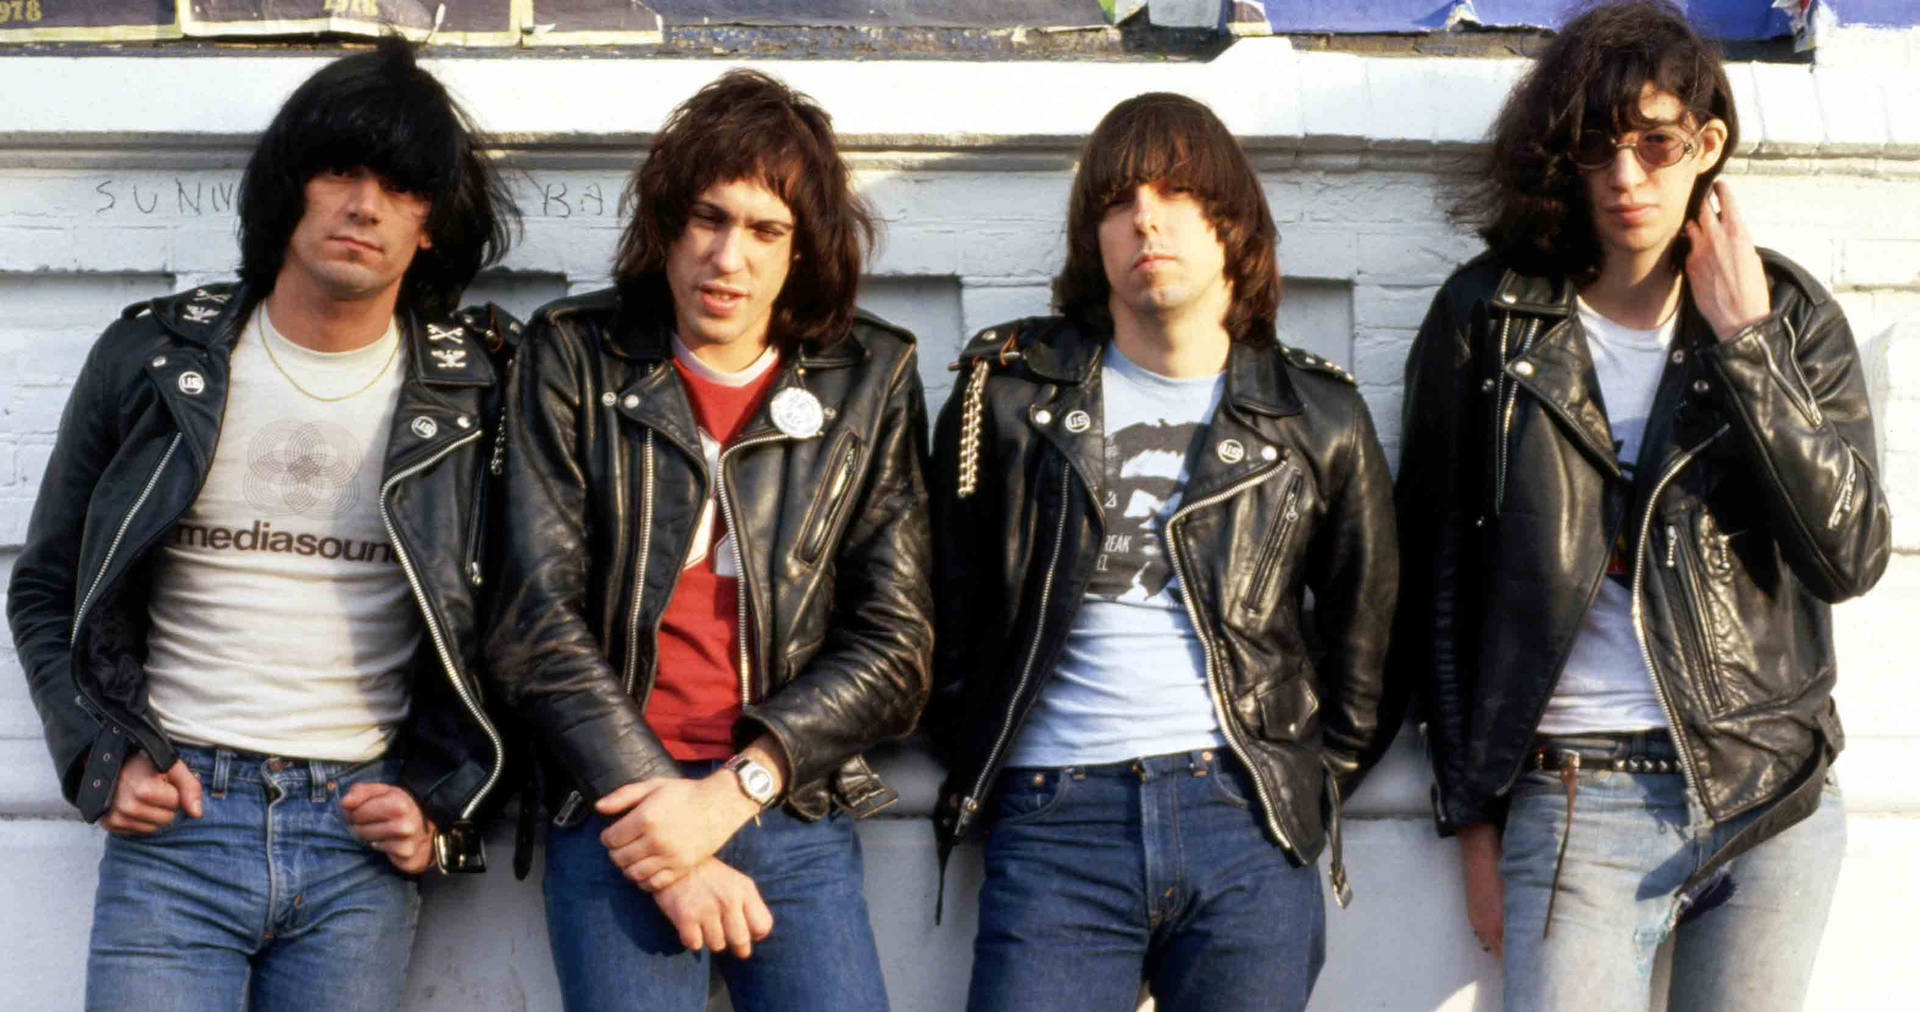 Iconic Ramones Band During A 1974 Photoshoot Background